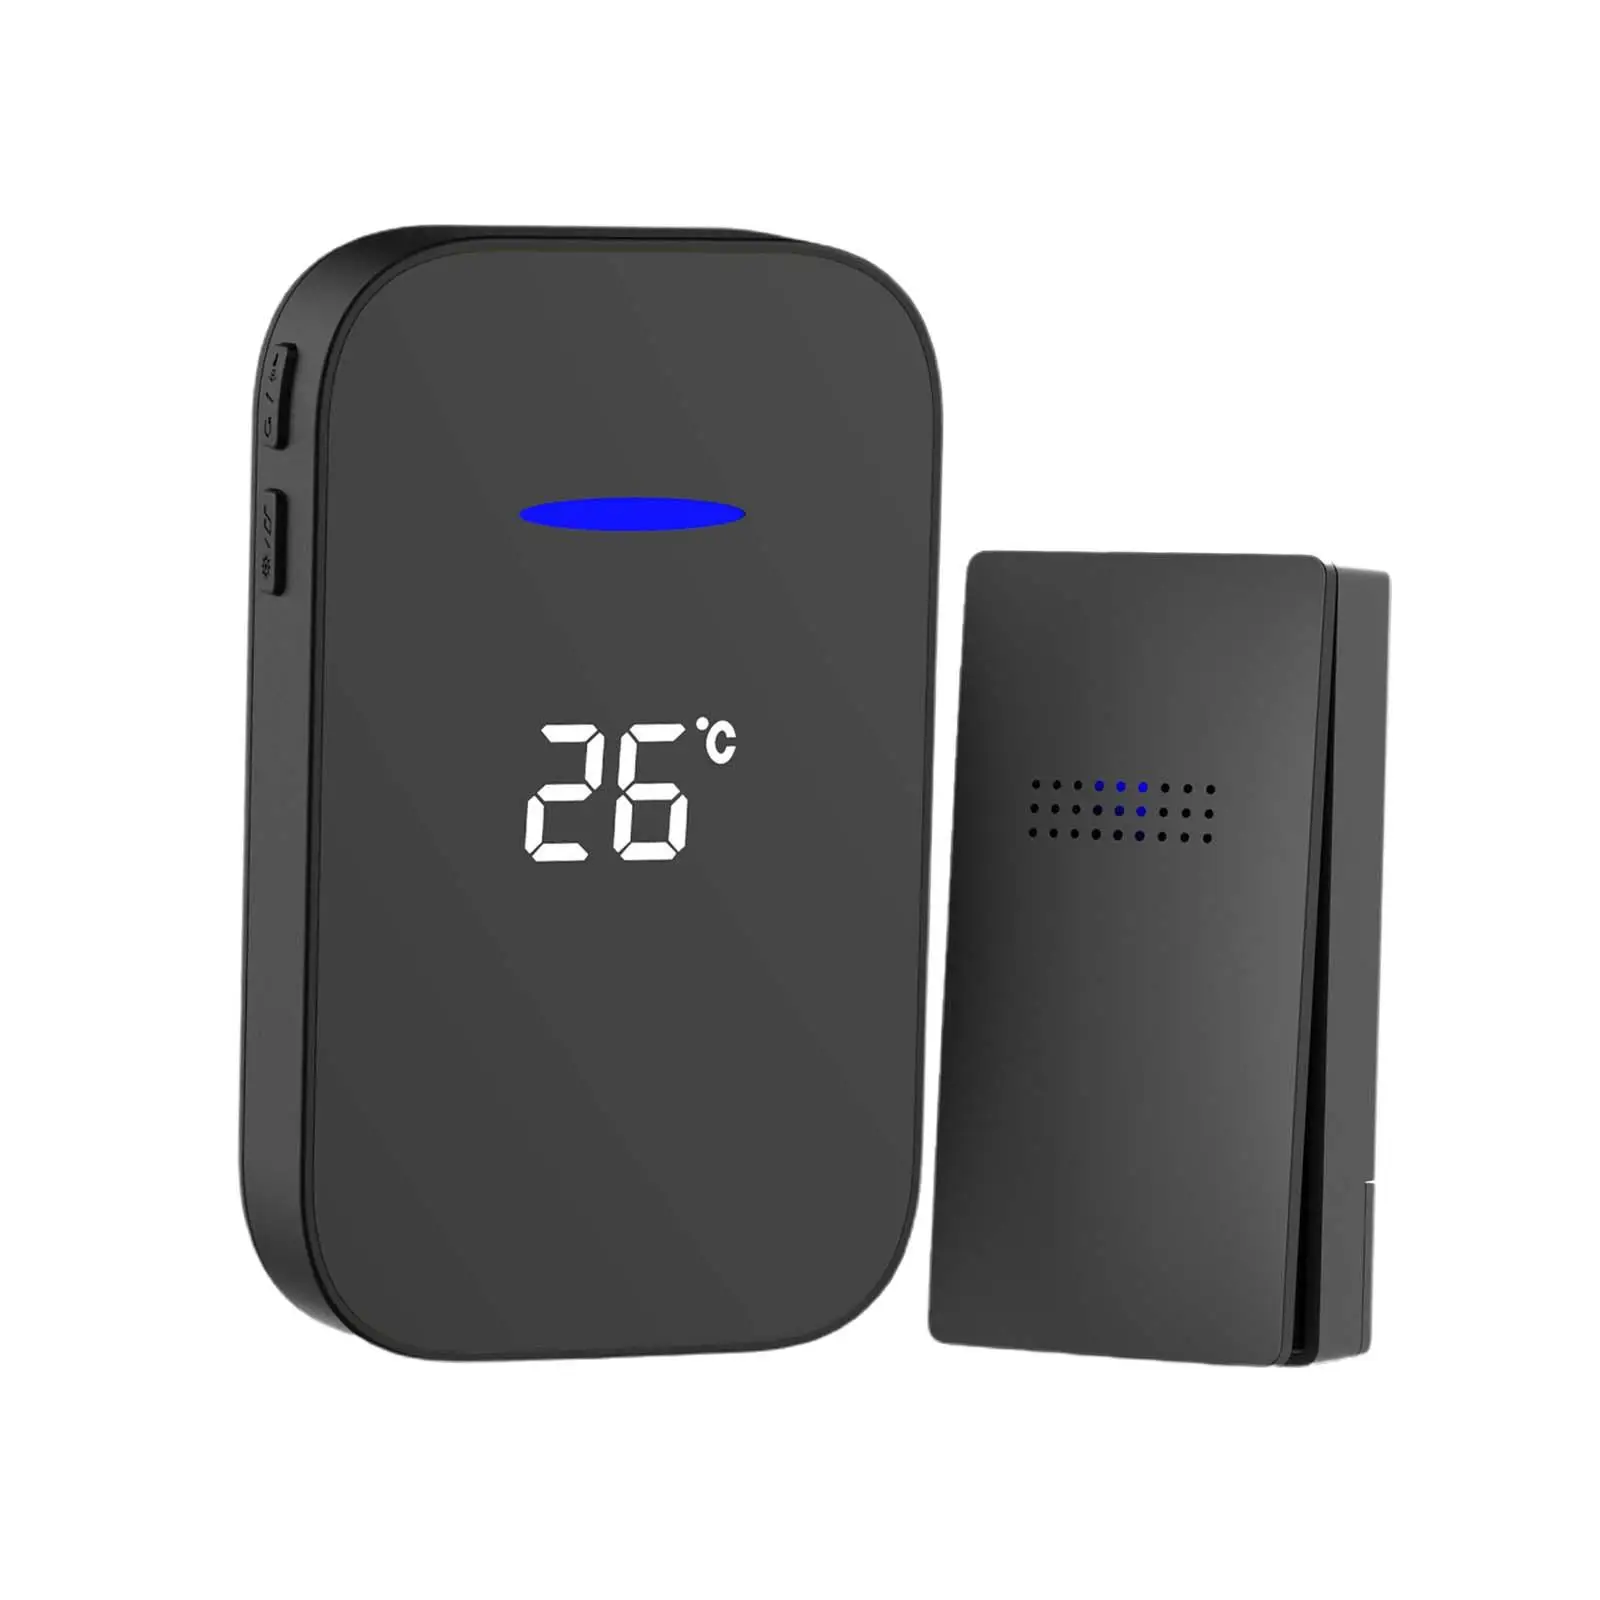 Outdoor Wireless Doorbell Multifunction Easy to Use Temperature Display Security Smart for Hotel Apartment Wall Bedroom School